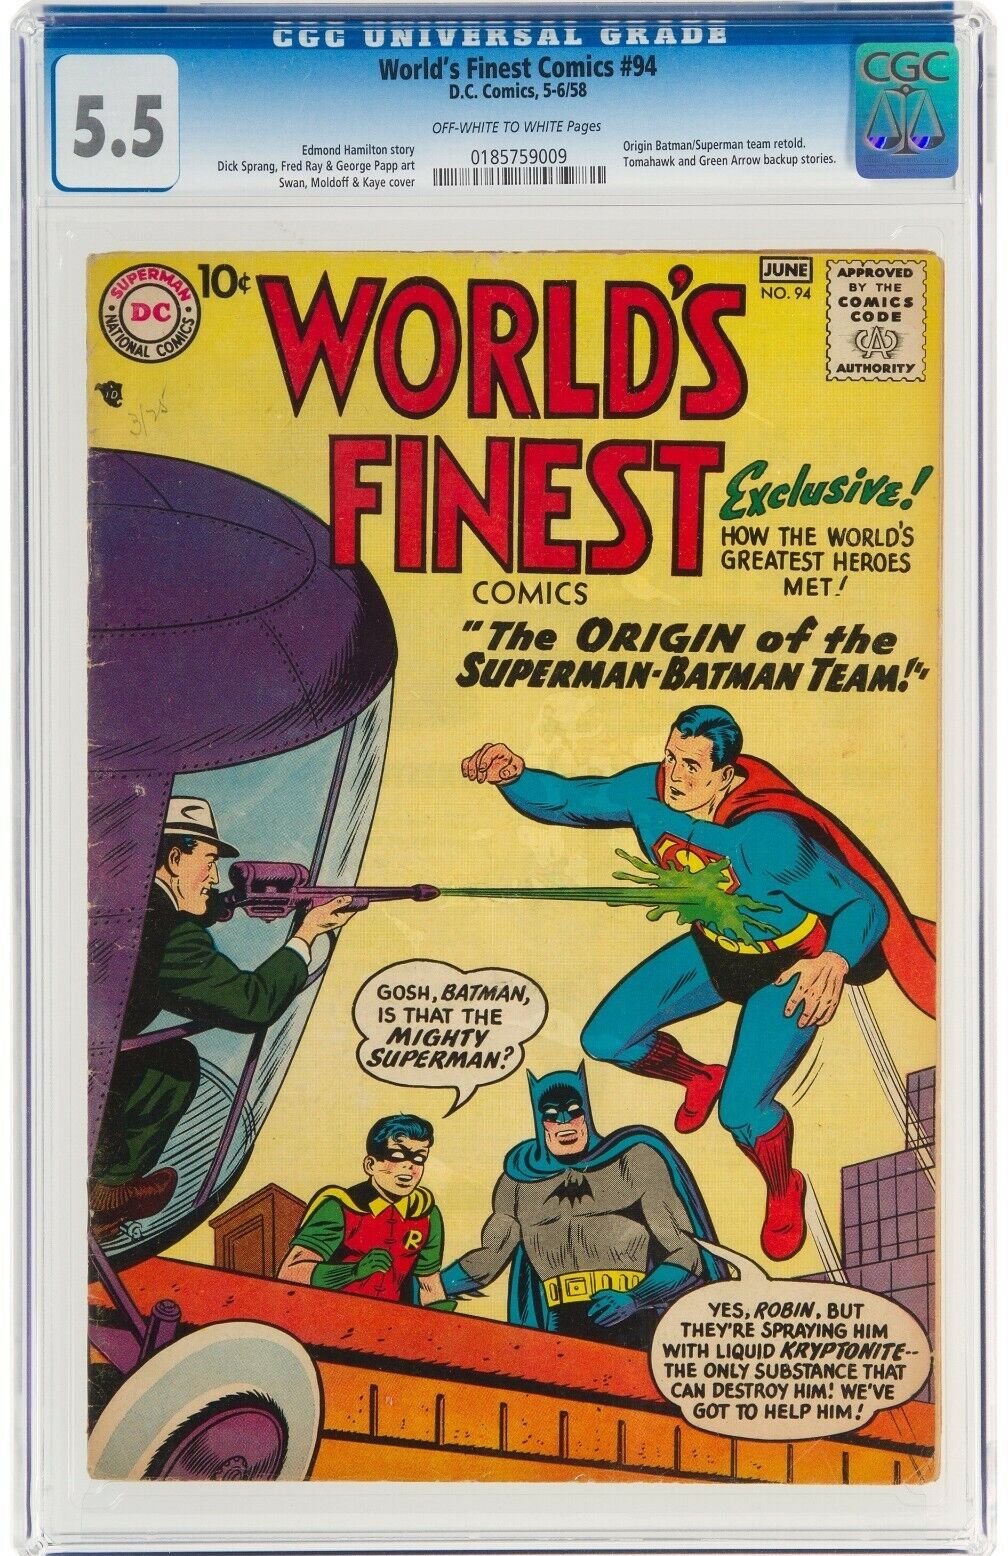 WORLDS FINEST #94 CGC 5.5 ORIGIN BATMAN SUPERMAN TEAM GREEN ARROW 1958